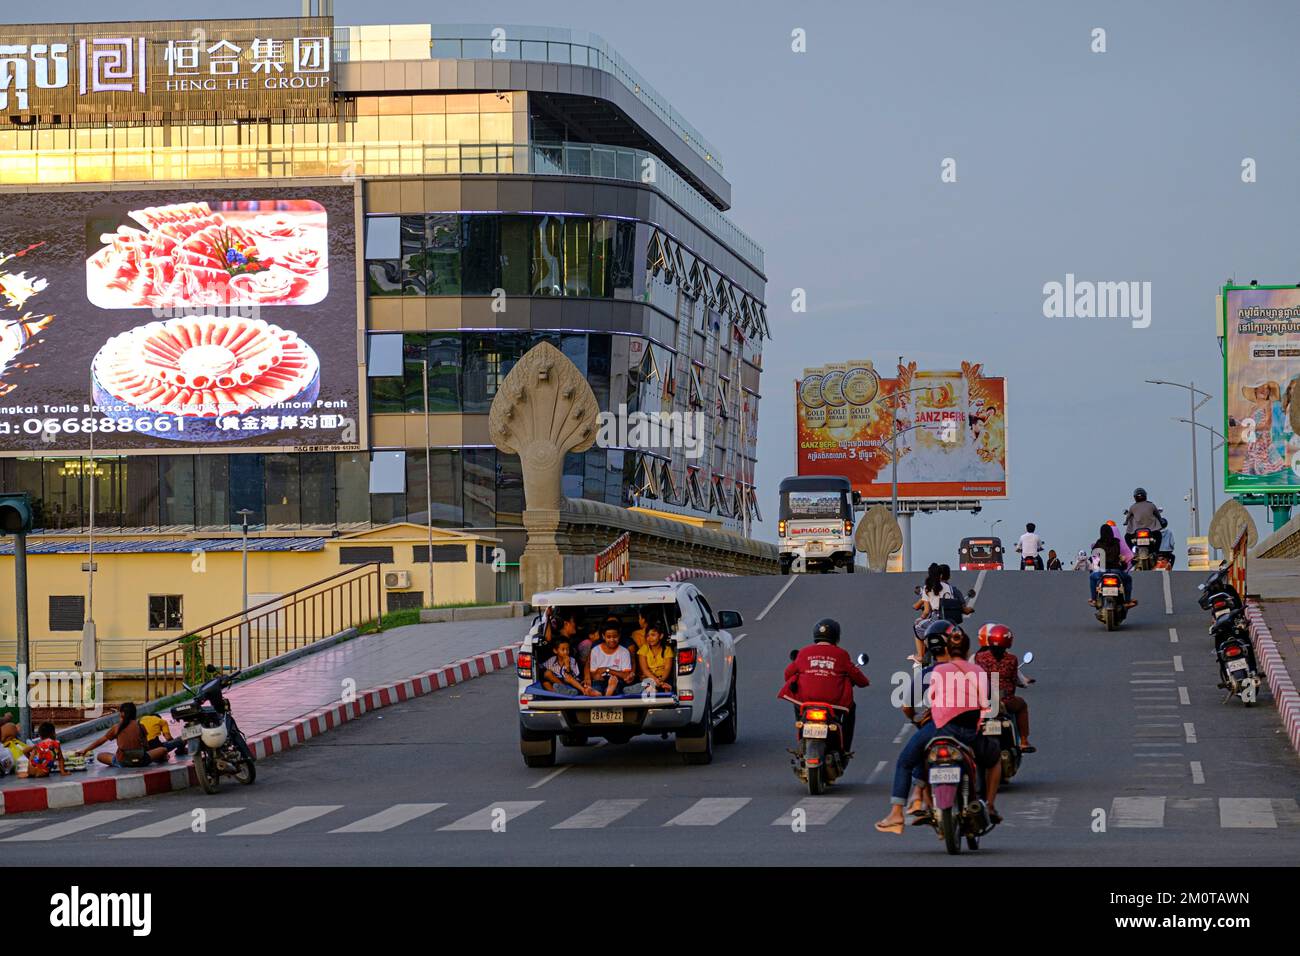 Cambodia, Phnom Penh, Stock Photo